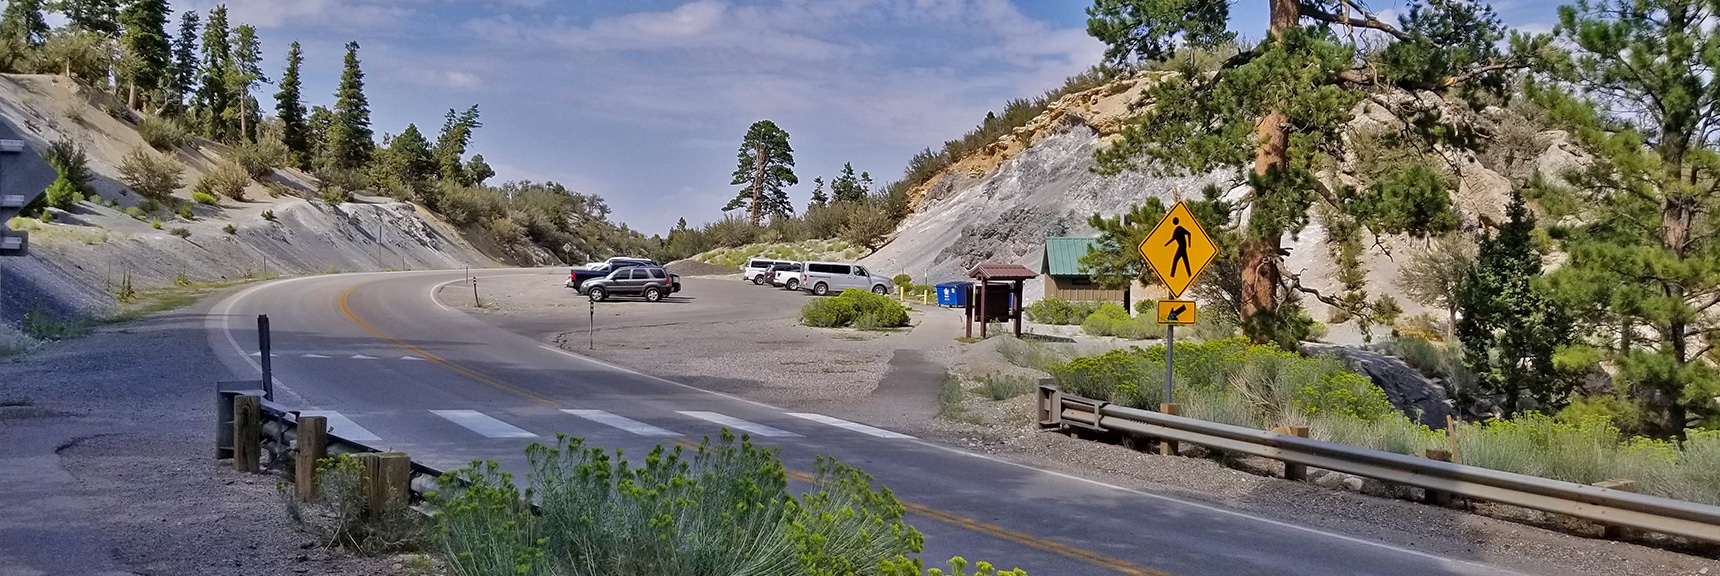 Parking on Deer Creek Road for Deer Creek Picnic Area | Deer Creek Rd - Mummy Cliffs - Mummy Springs - Raintree - Fletcher Peak - Cougar Ridge Trail Circuit | Mt Charleston Wilderness | Spring Mountains, Nevada